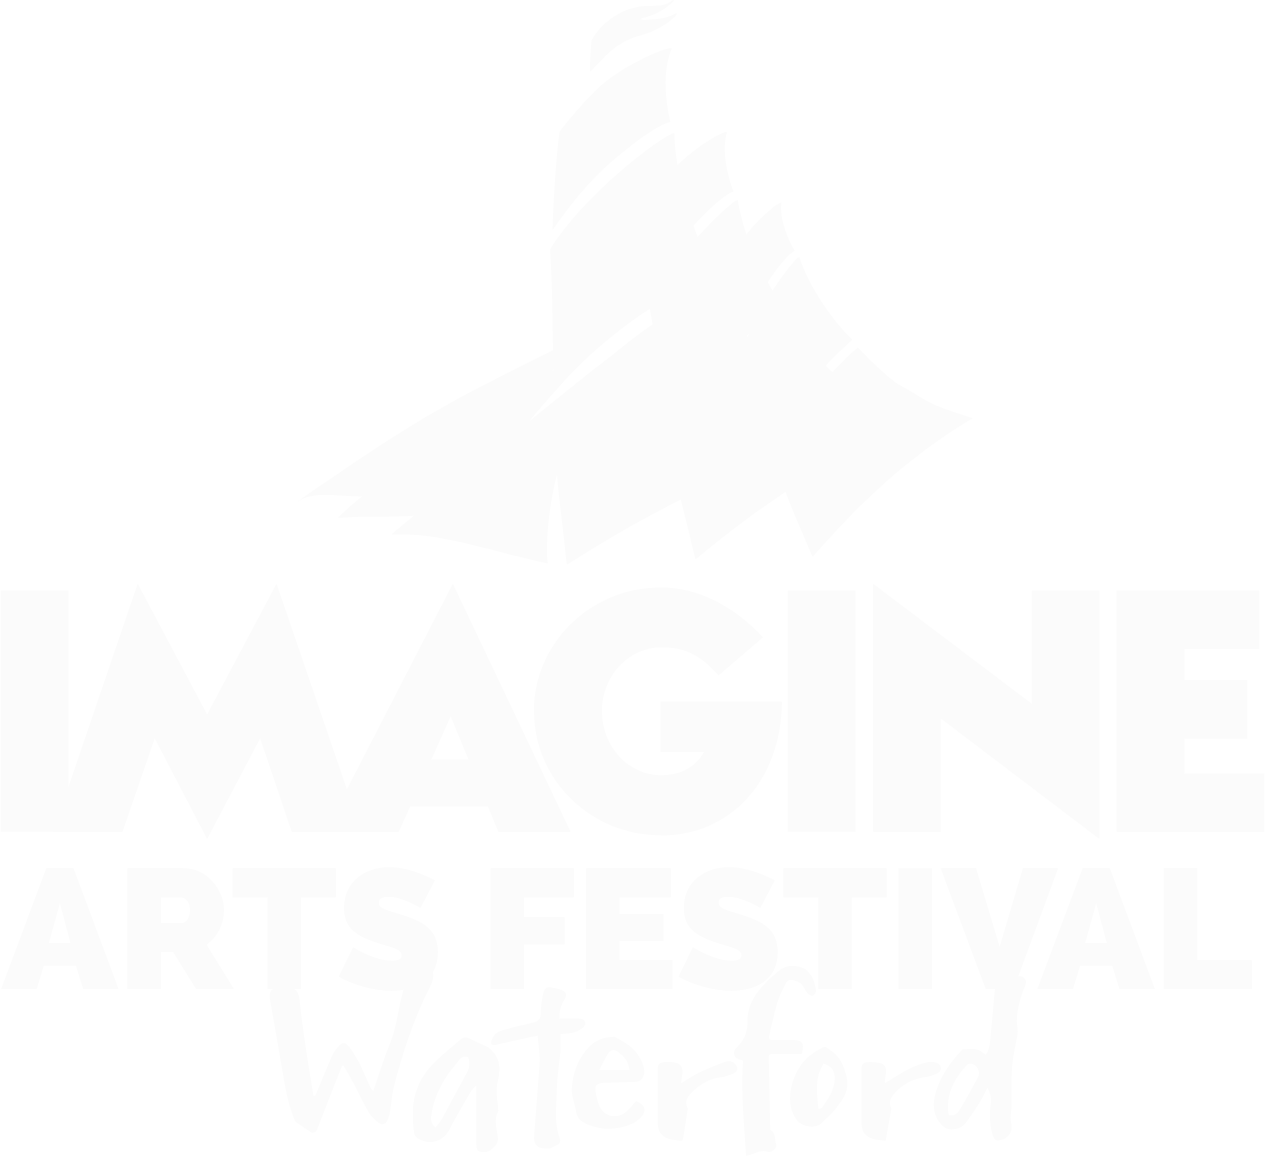 Imagine Arts Festival